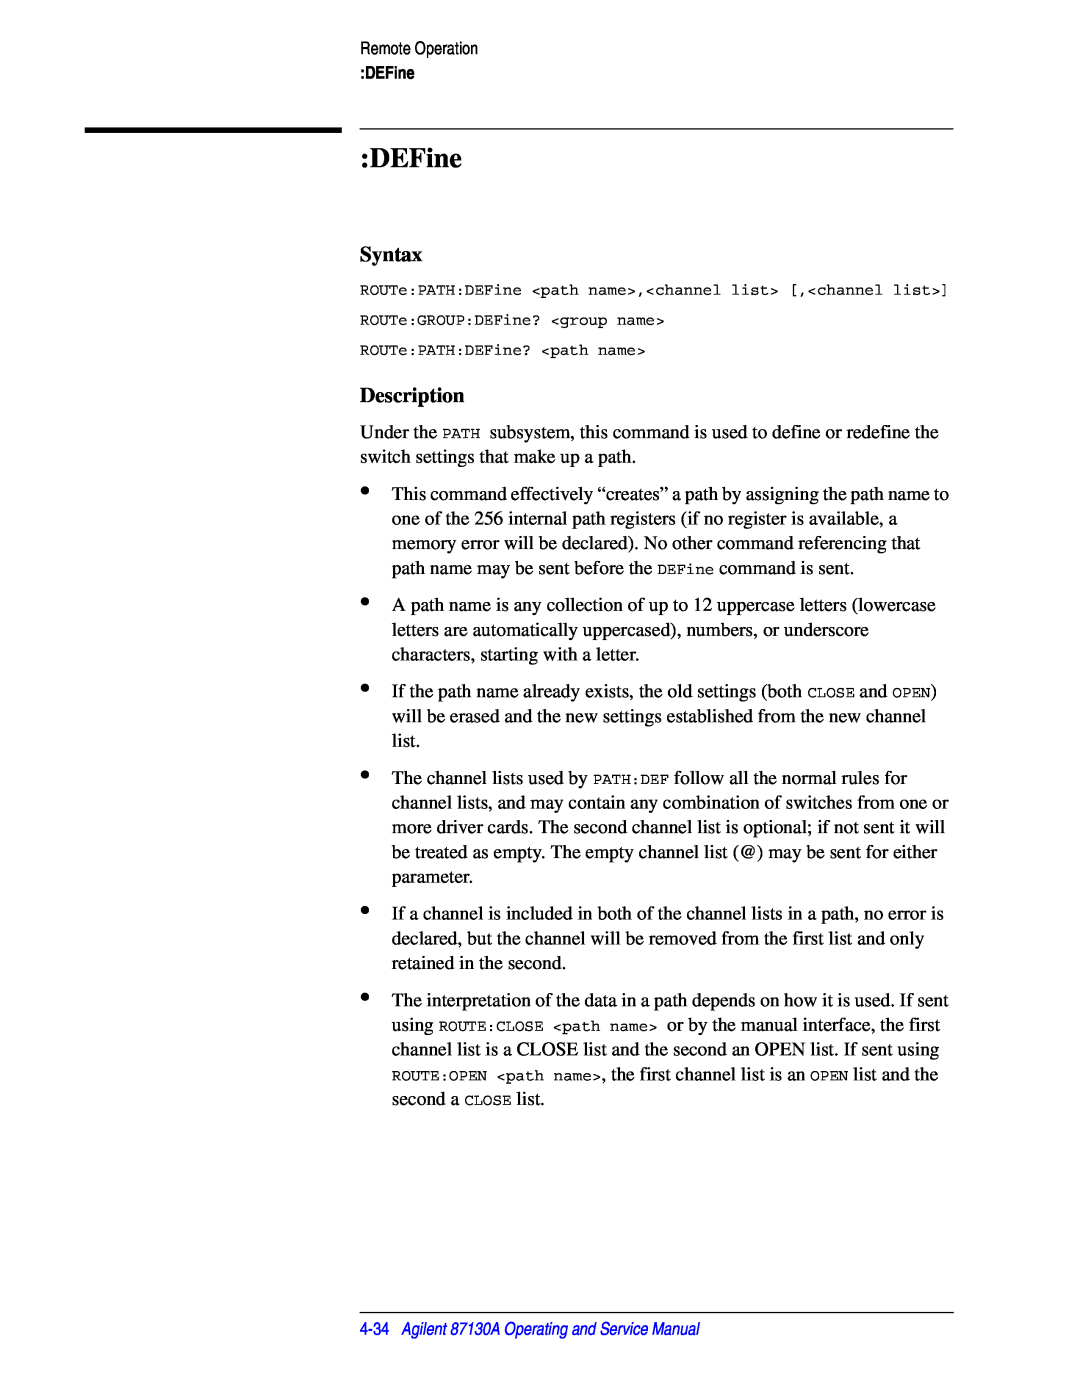 Agilent Technologies 87130A manual DEFine, Syntax, Description 